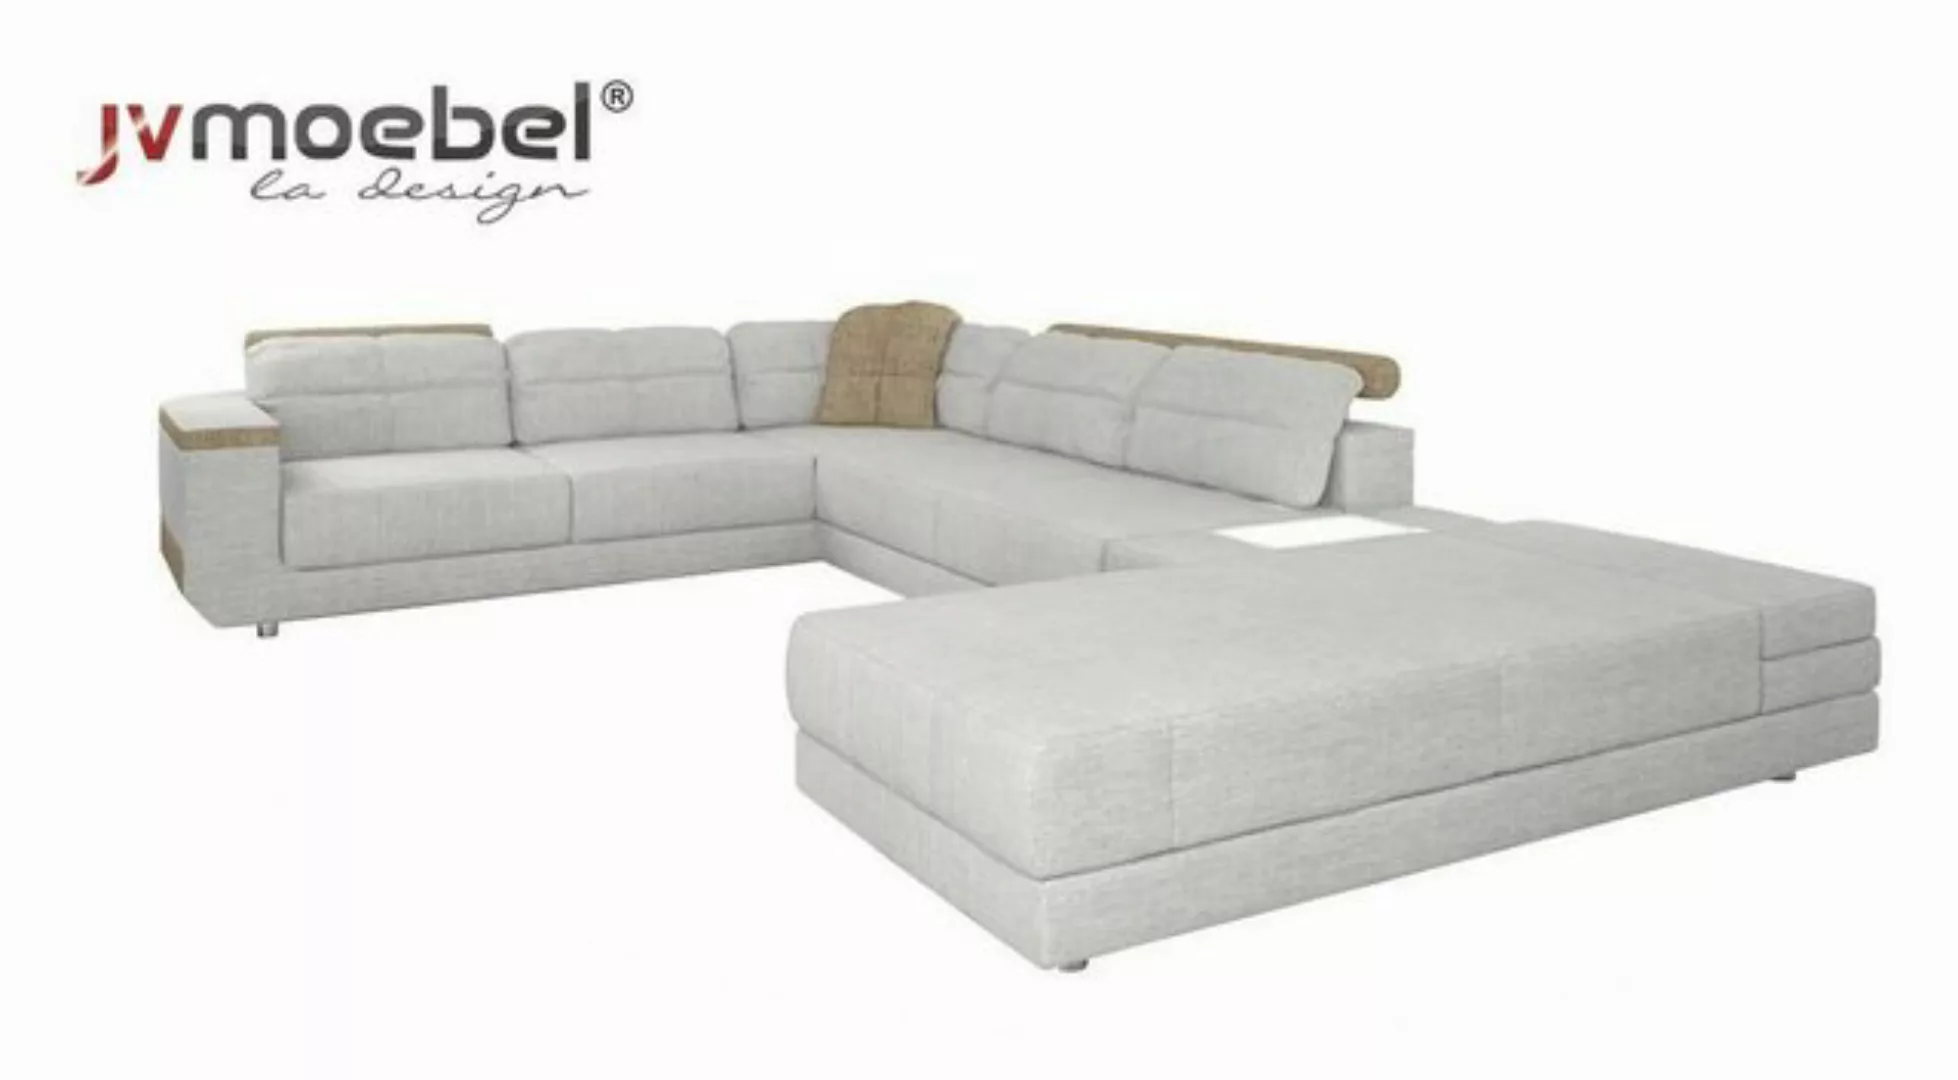 JVmoebel Ecksofa Eck Sofa Couch Polster Ecke Leder Sofa Couch, Made in Euro günstig online kaufen